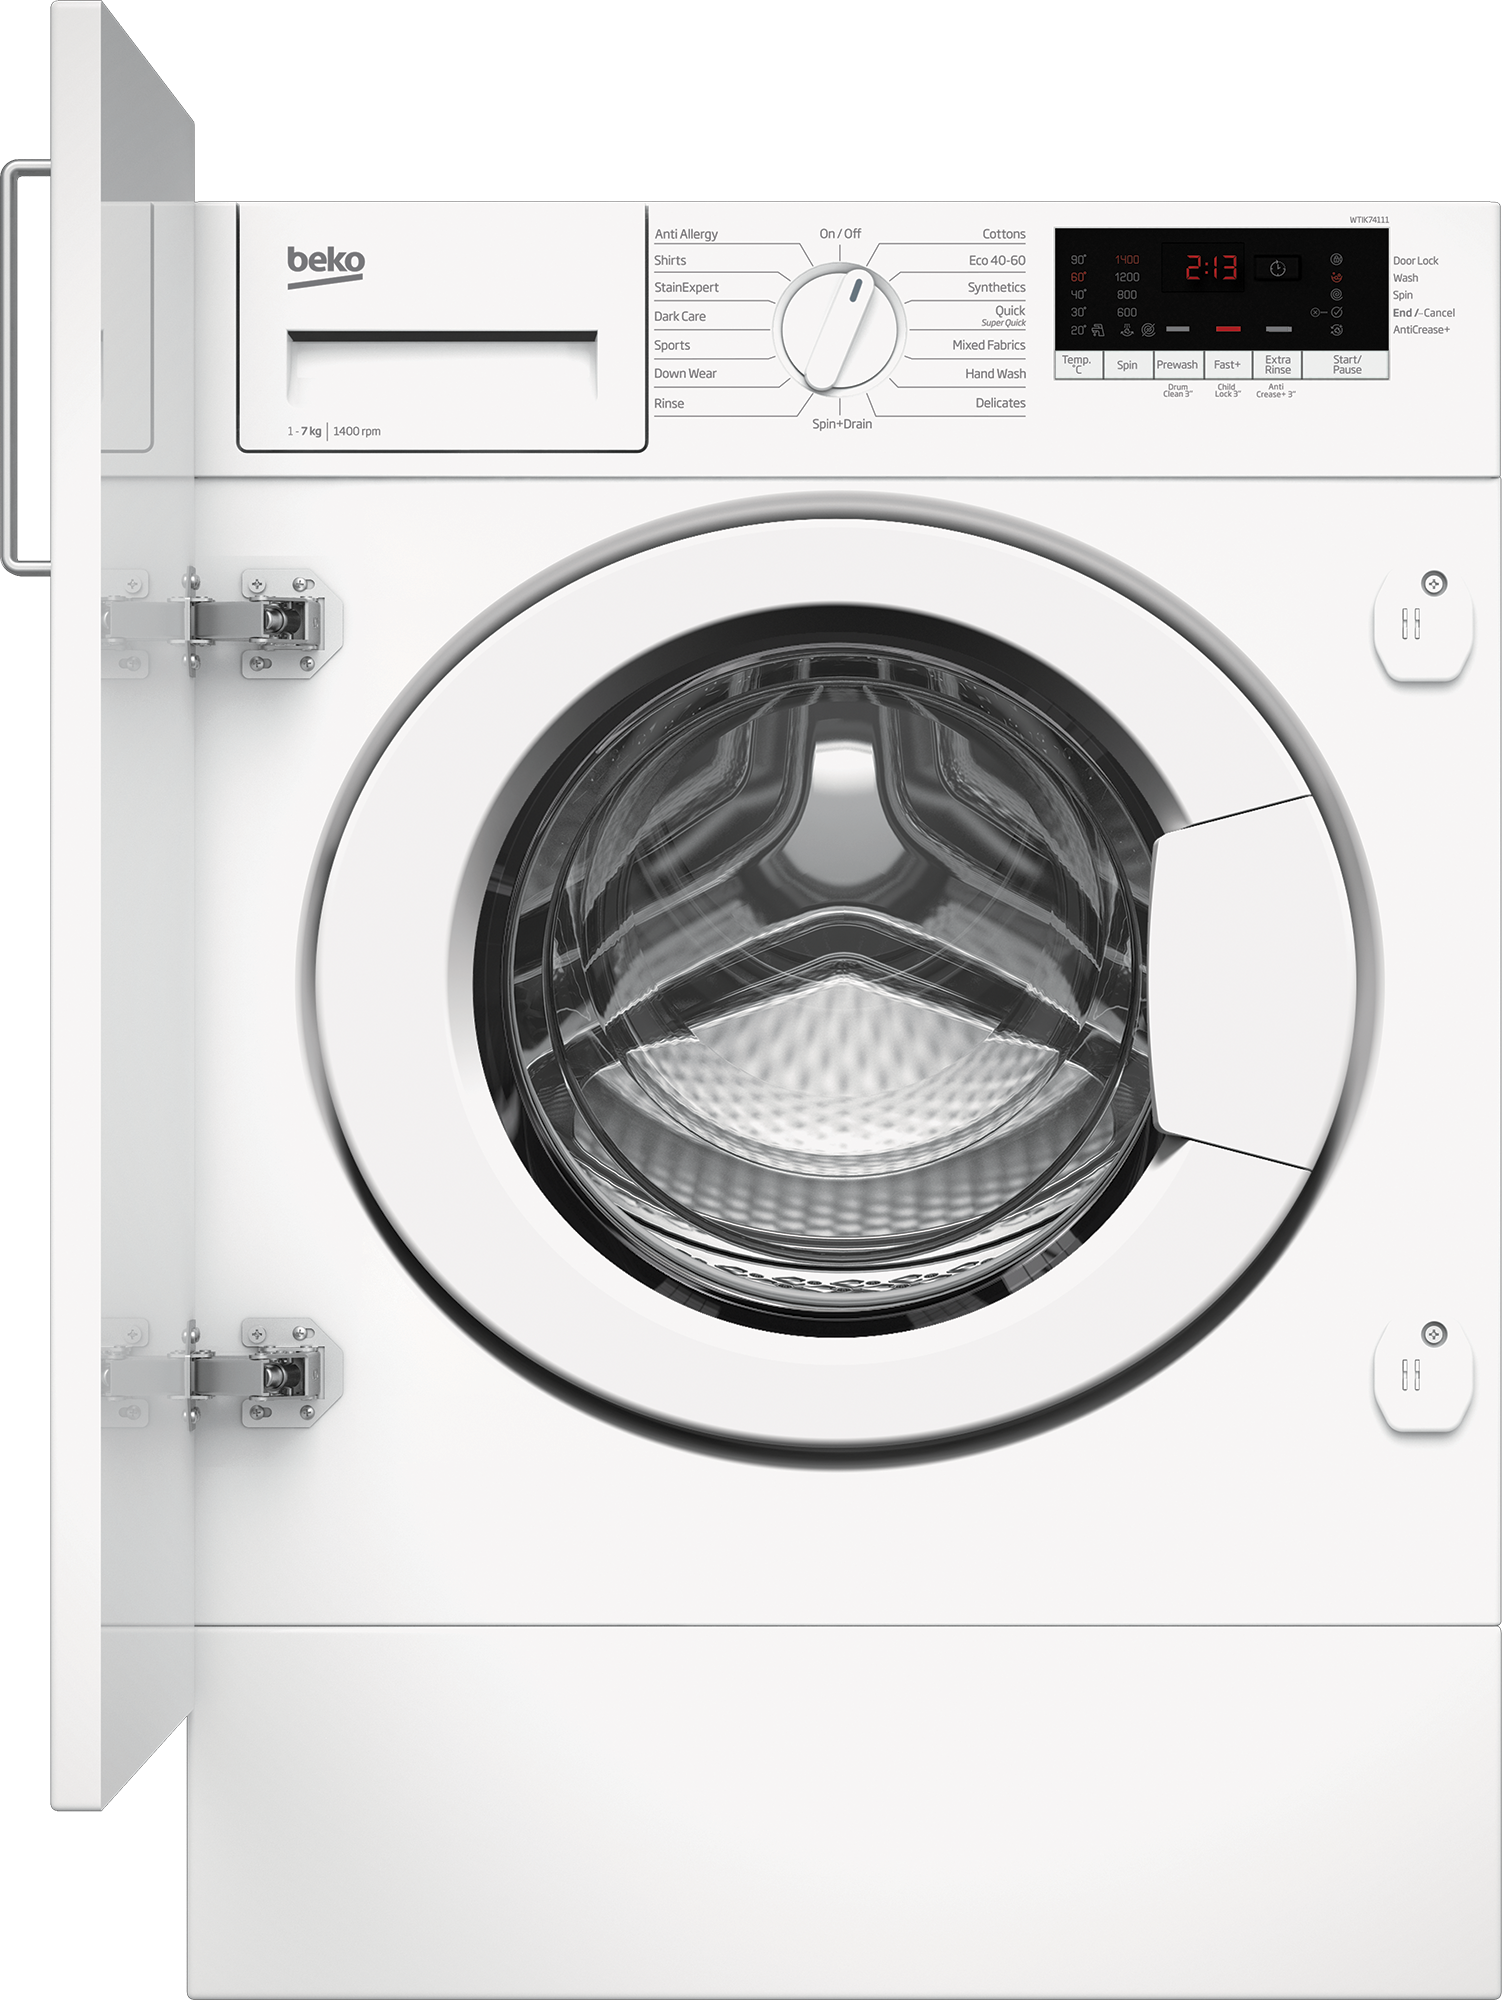 Beko RecycledTub WTIK74111 Integrated 7kg Washing Machine with 1400 rpm - White - C Rated, White